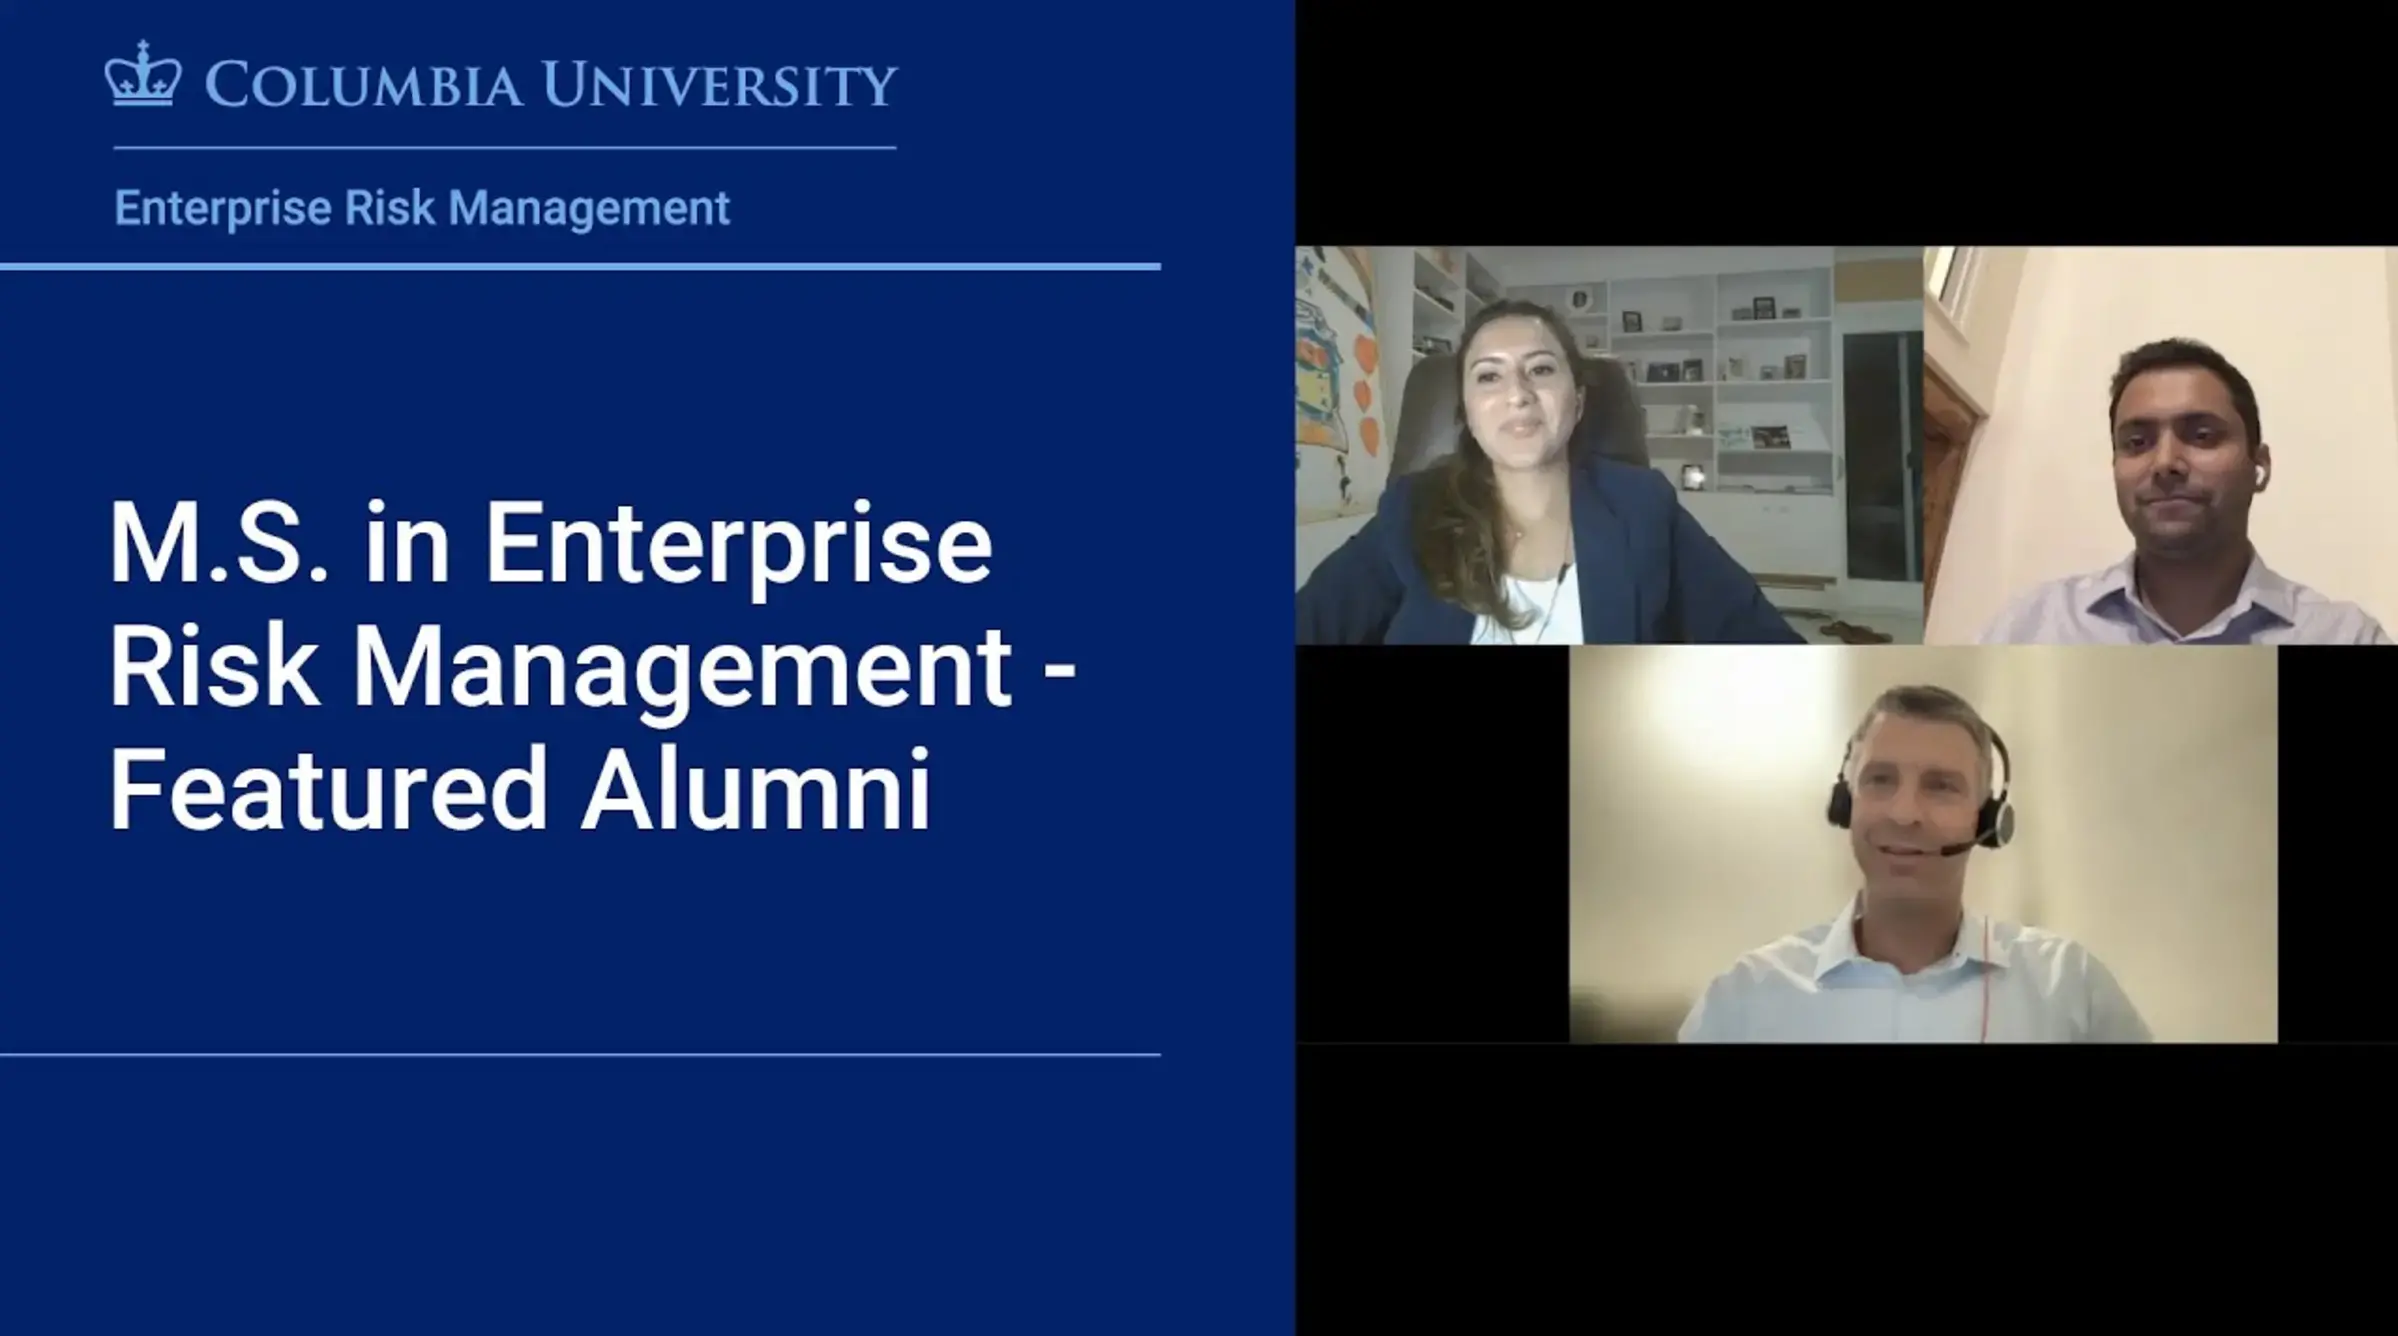 M.S. in Enterprise Risk Management - Featured Alumni, Sept. 2021